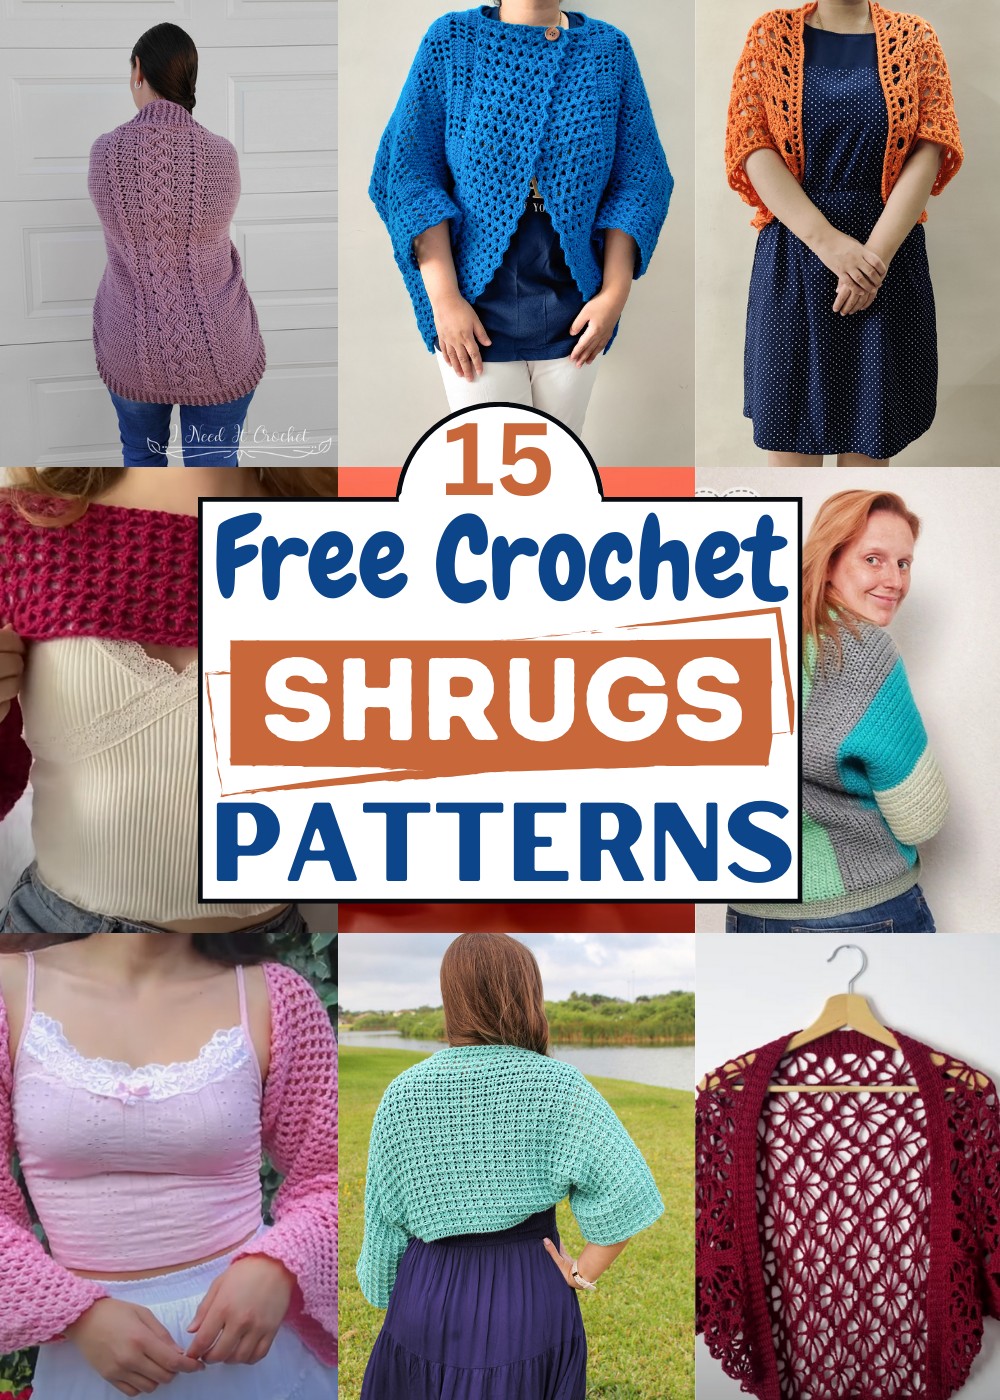 Free Crochet Shrugs Patterns 1